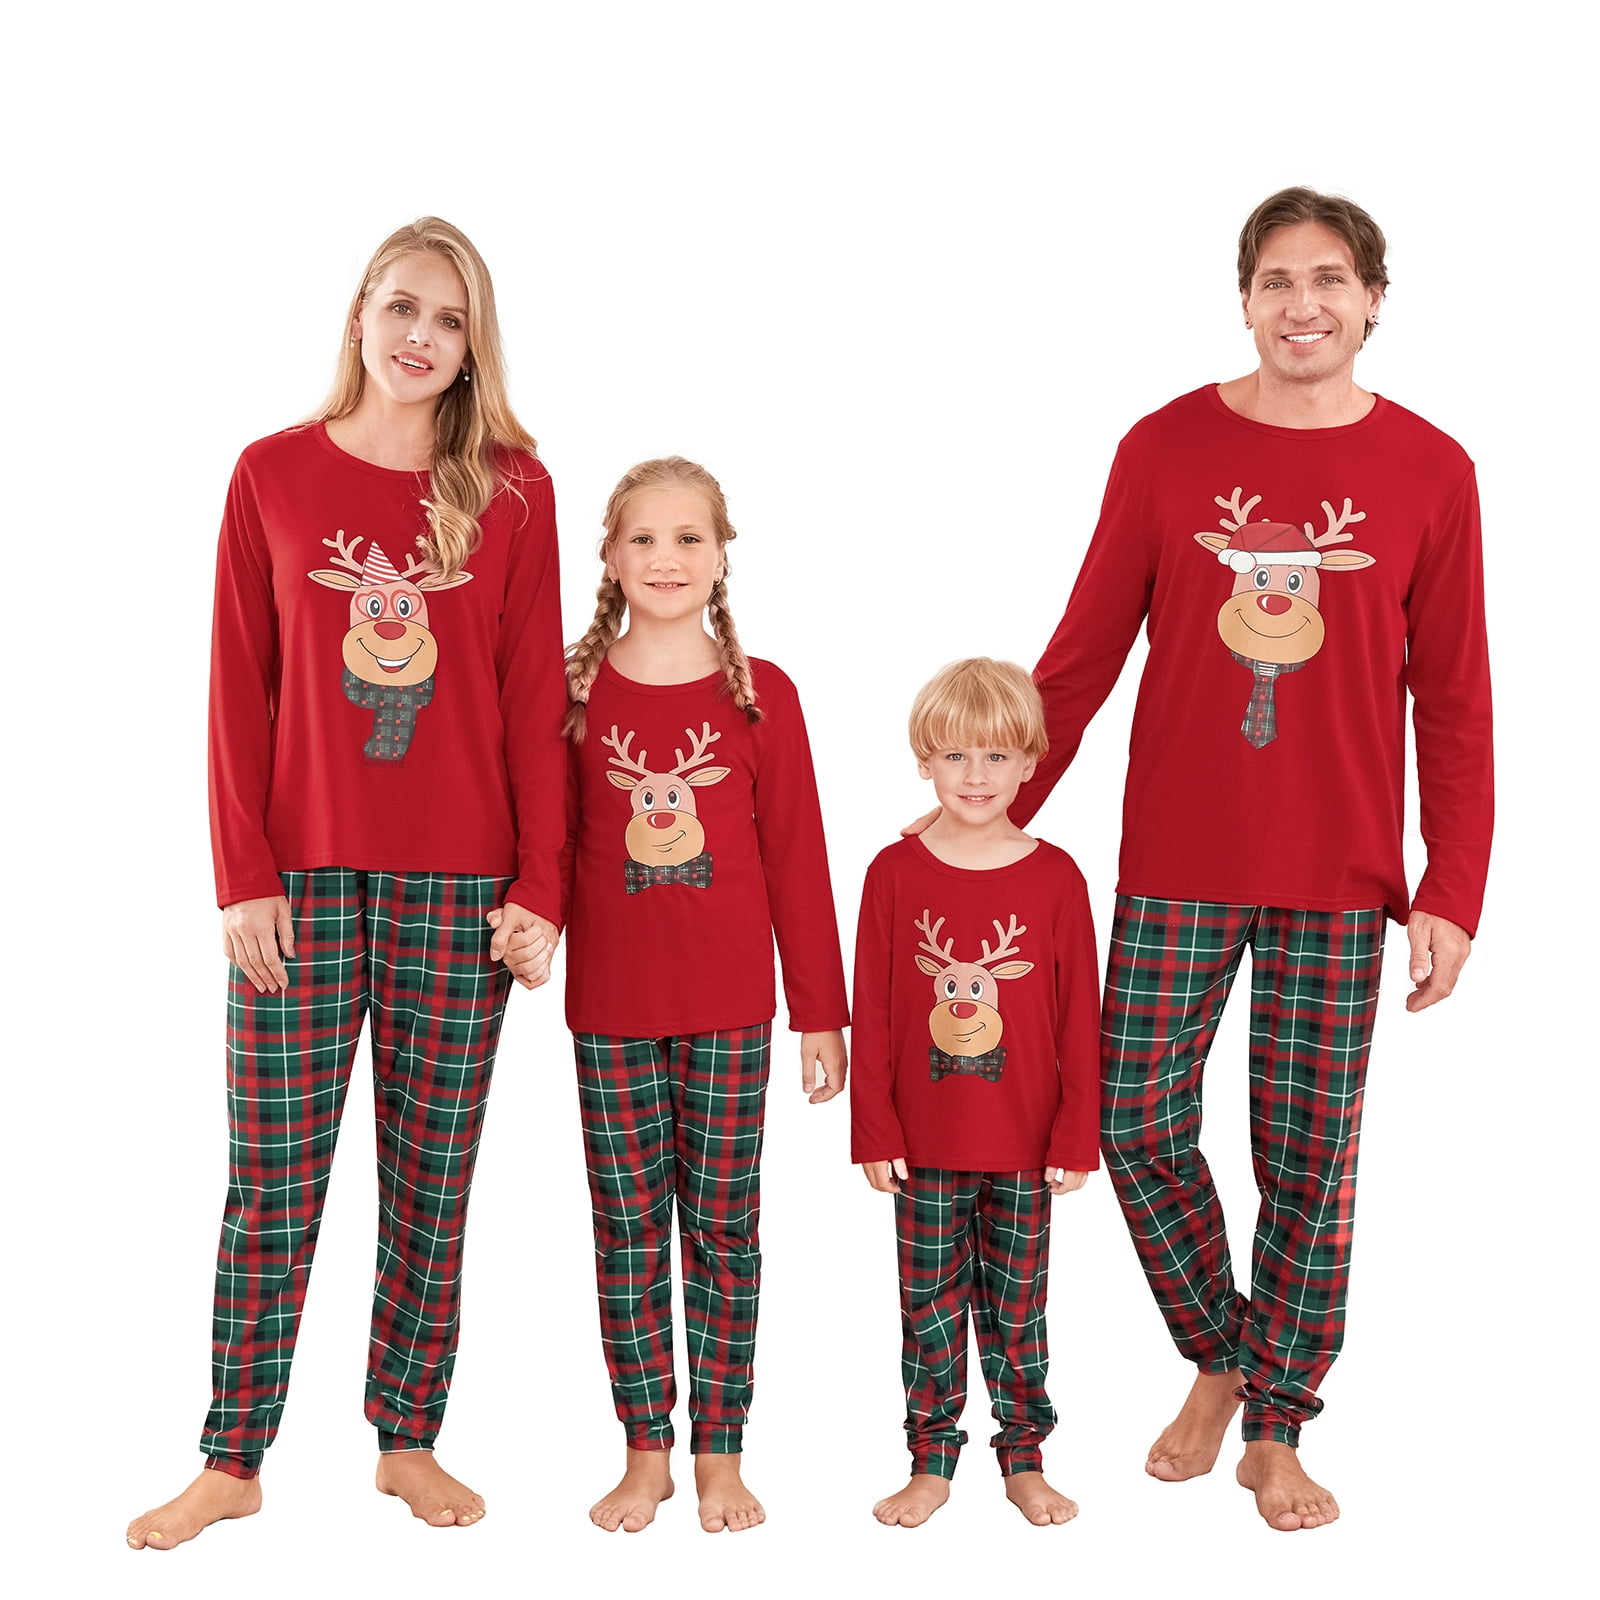 wsevypo Christmas Family Pajamas Matching Sets Christmas Pjs Sleepwear ...